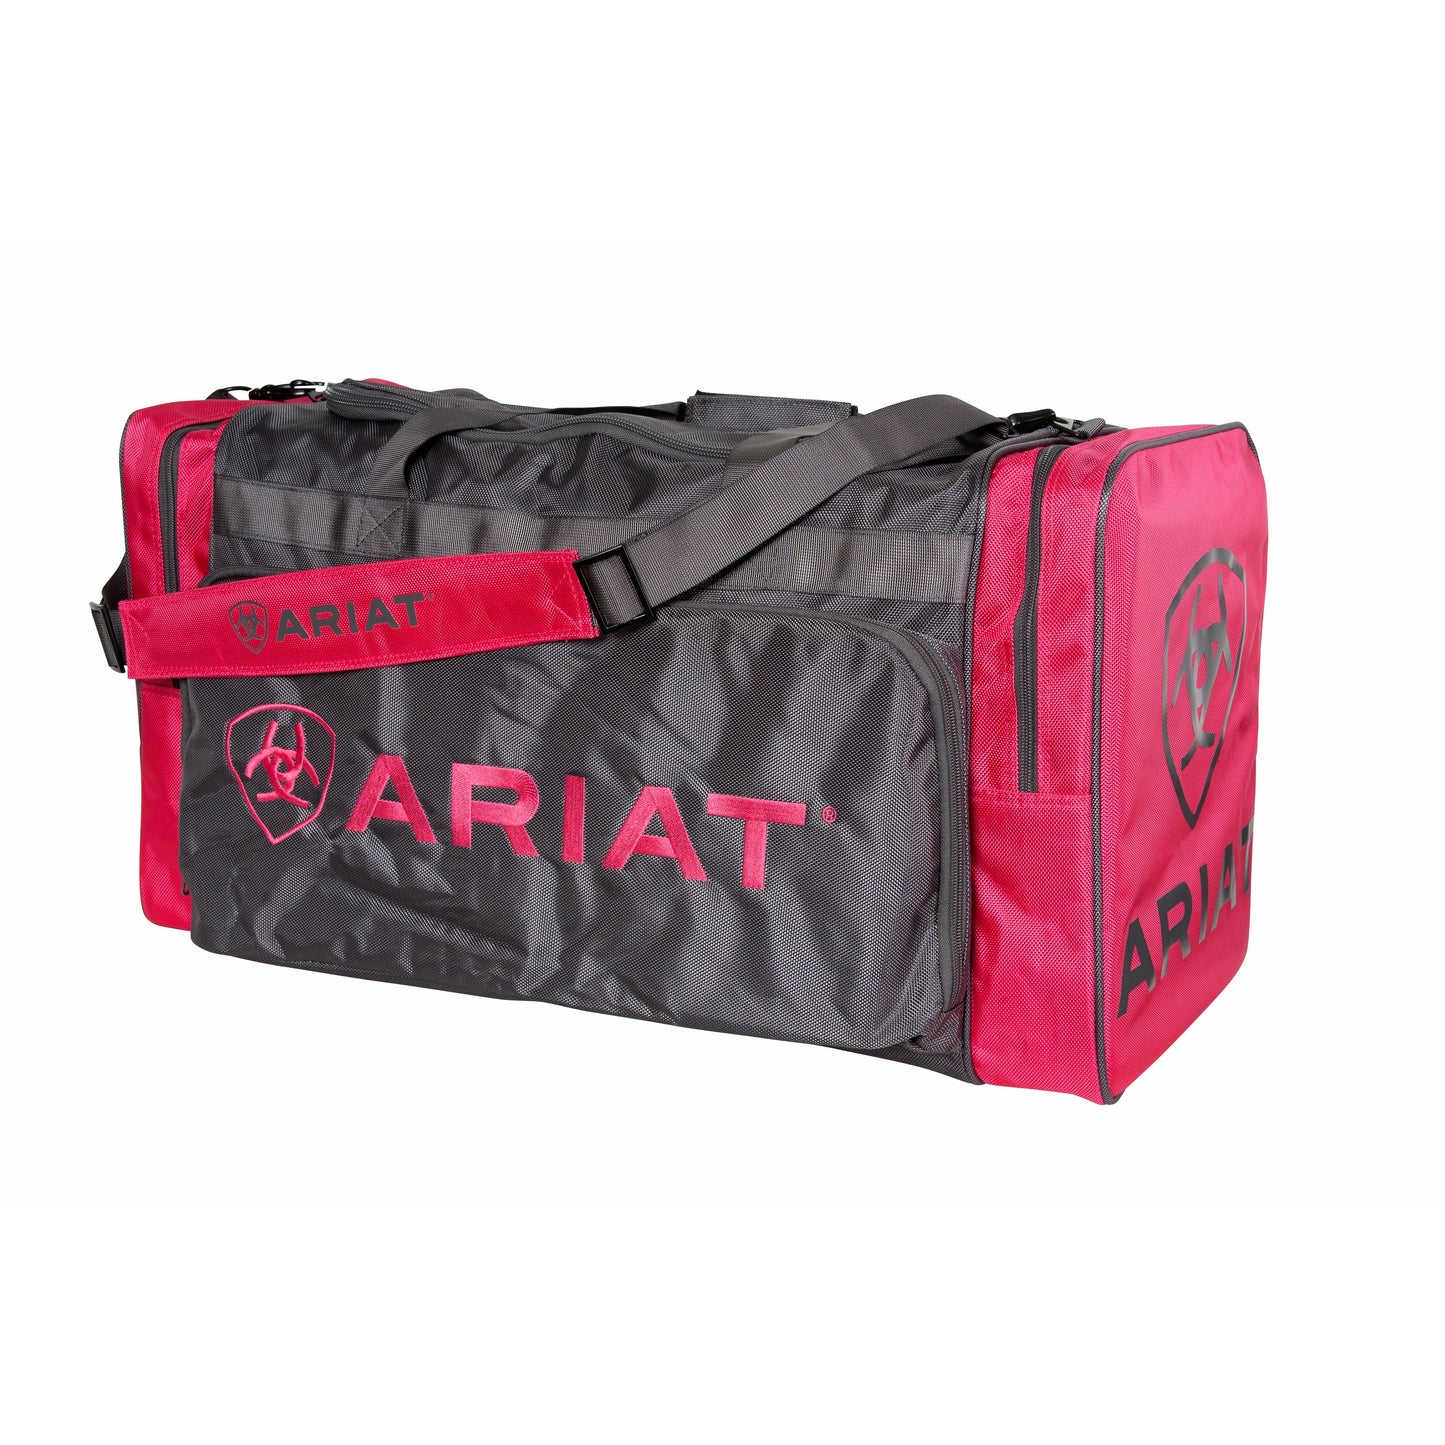 Ariat Gear Bag Pink/Charcoal